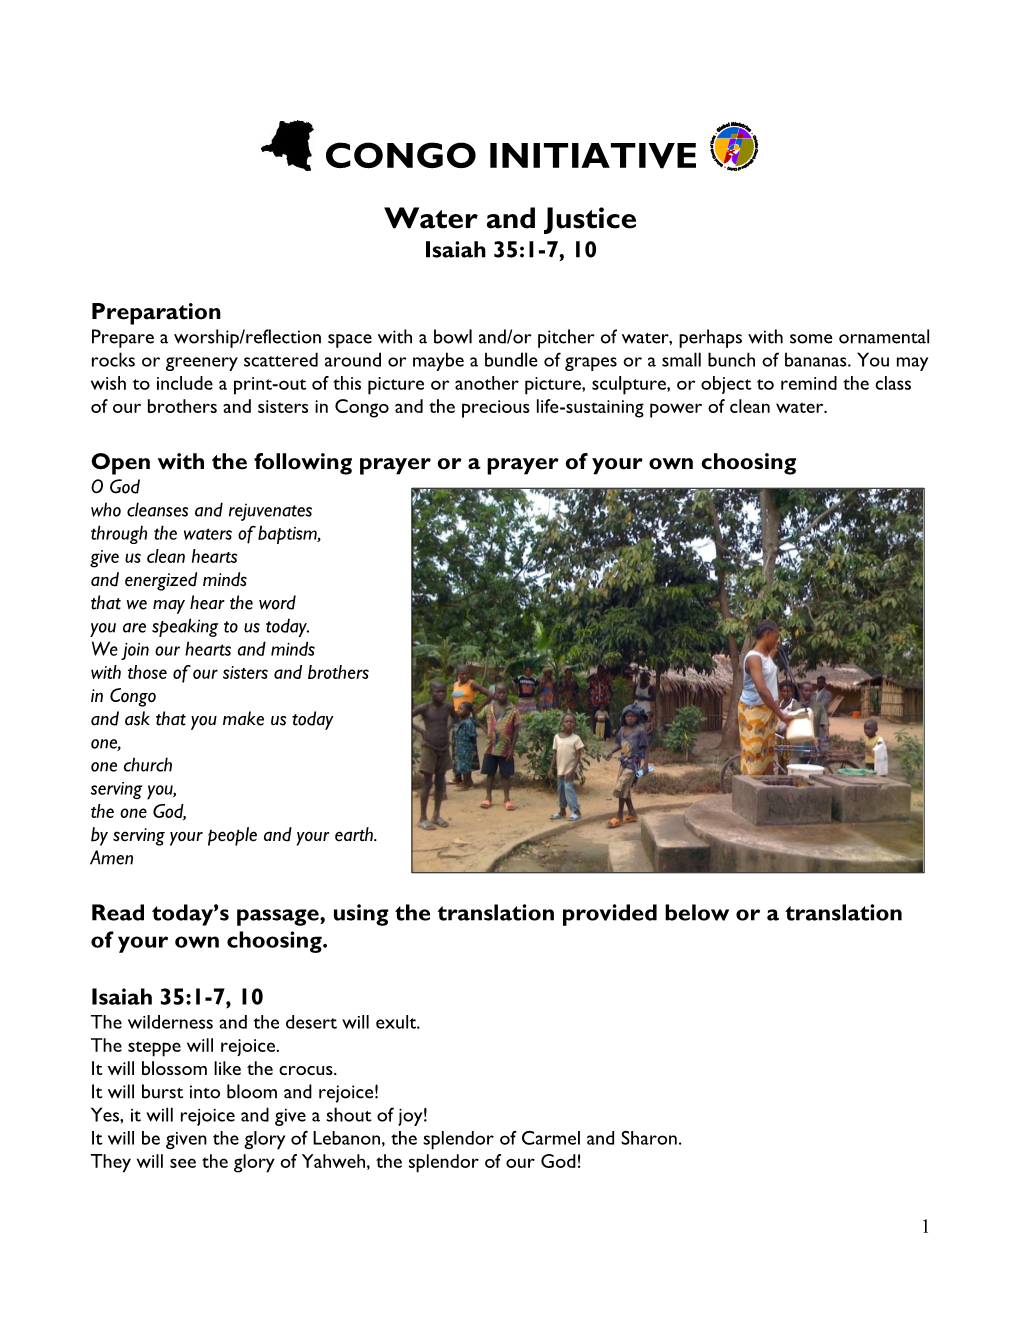 Congo Initiative